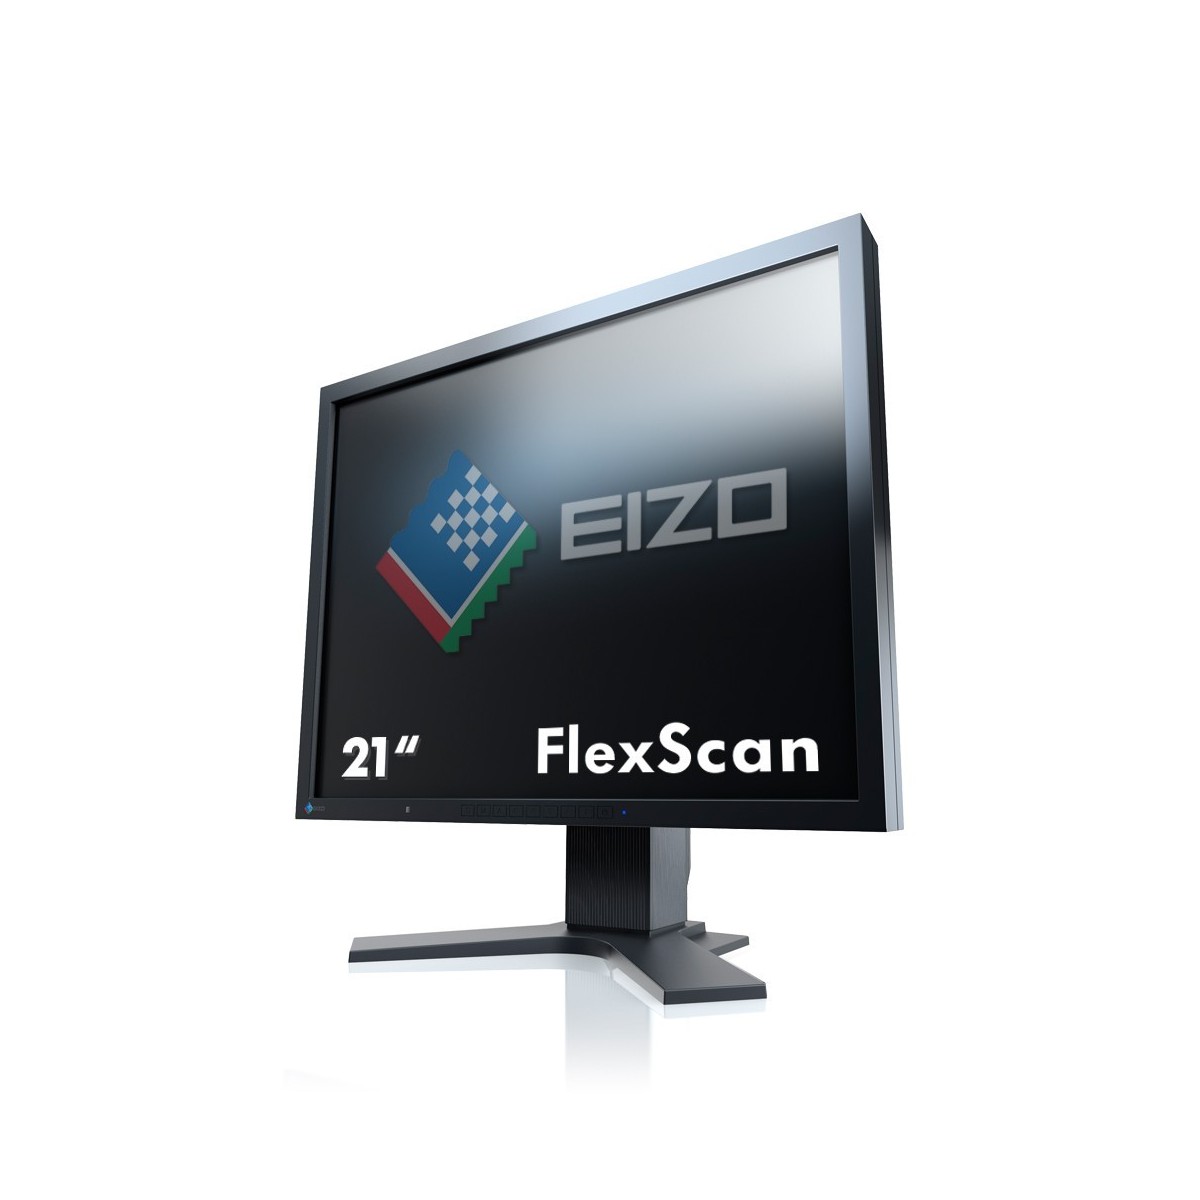 EIZO FlexScan S2133 - 54.1 cm (21.3") - 1600 x 1200 pixels - LCD - 3D - 20 ms - Black